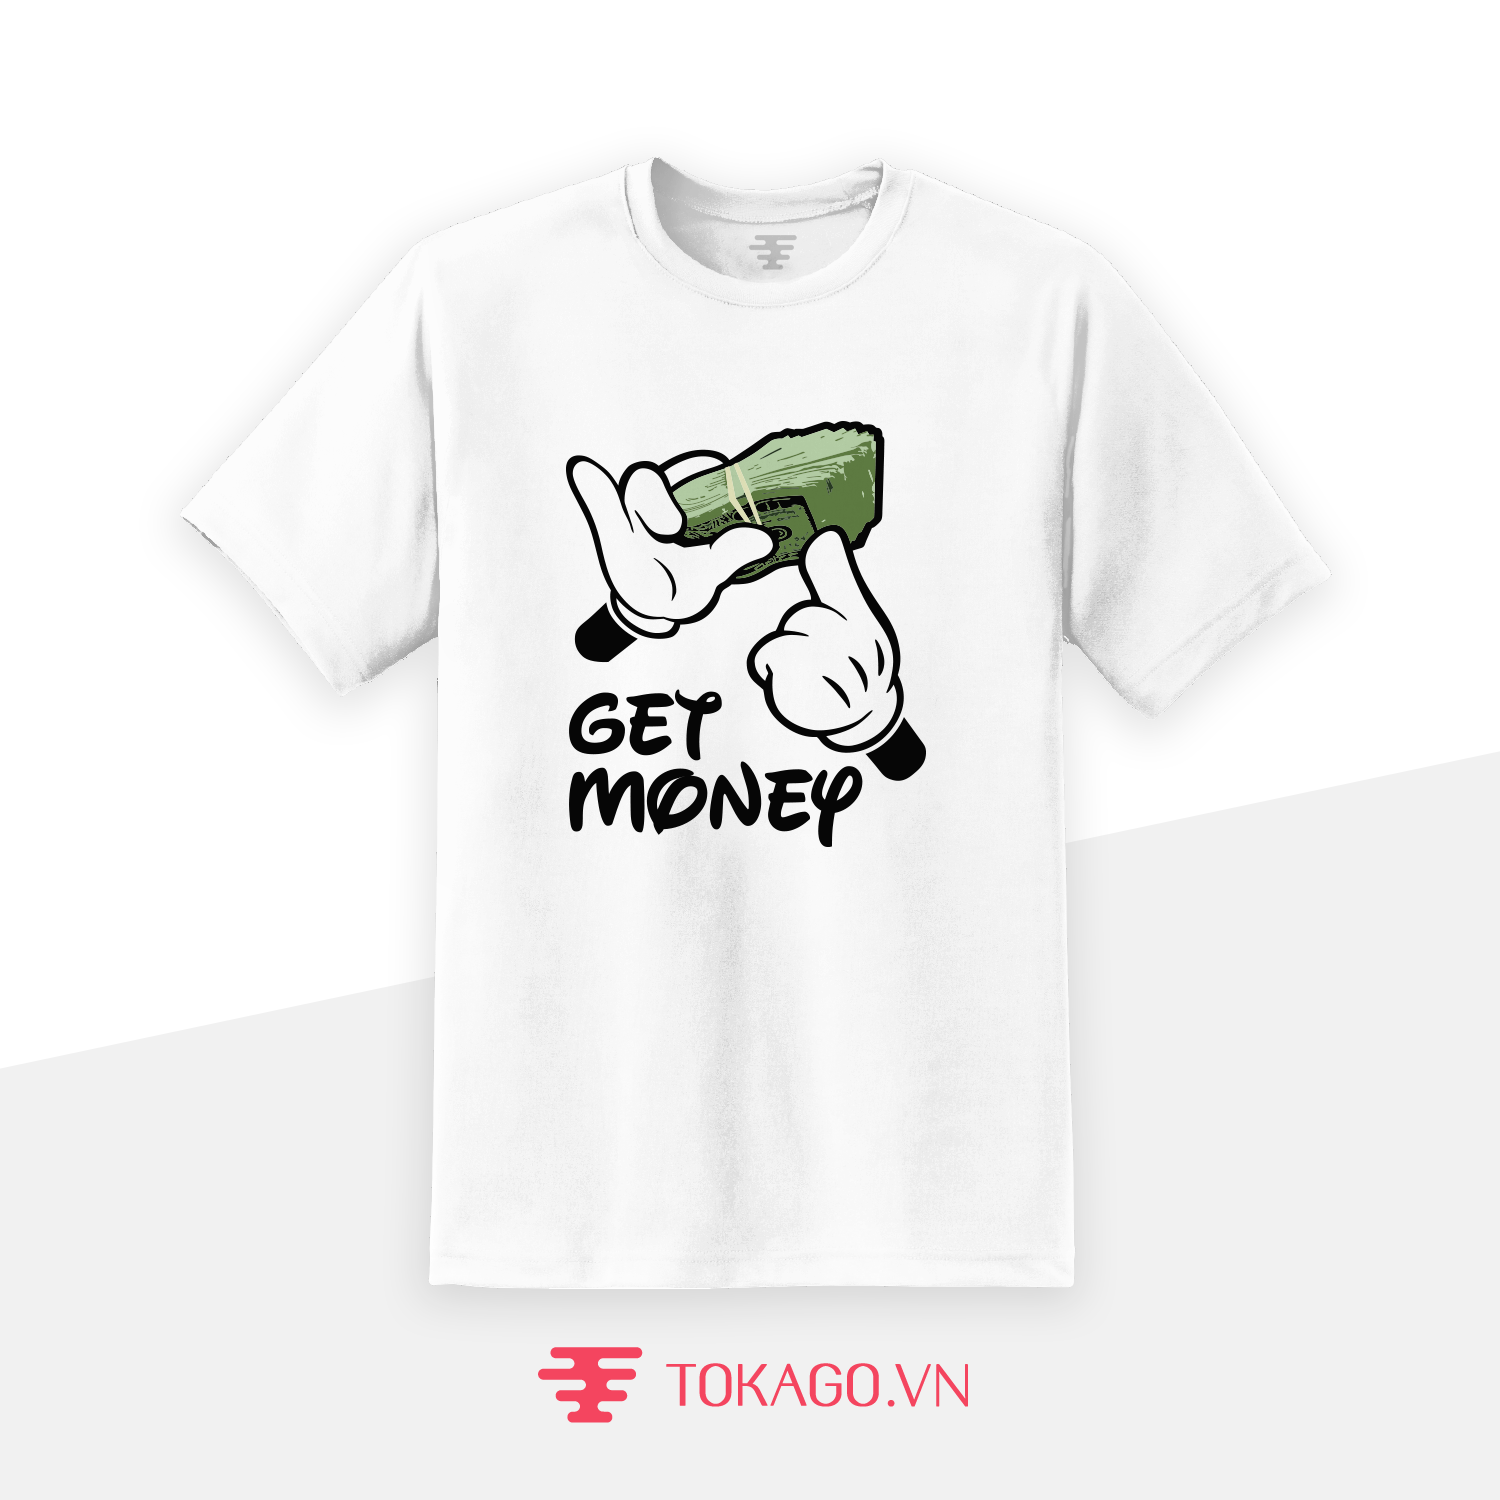 Get Money Tshirt